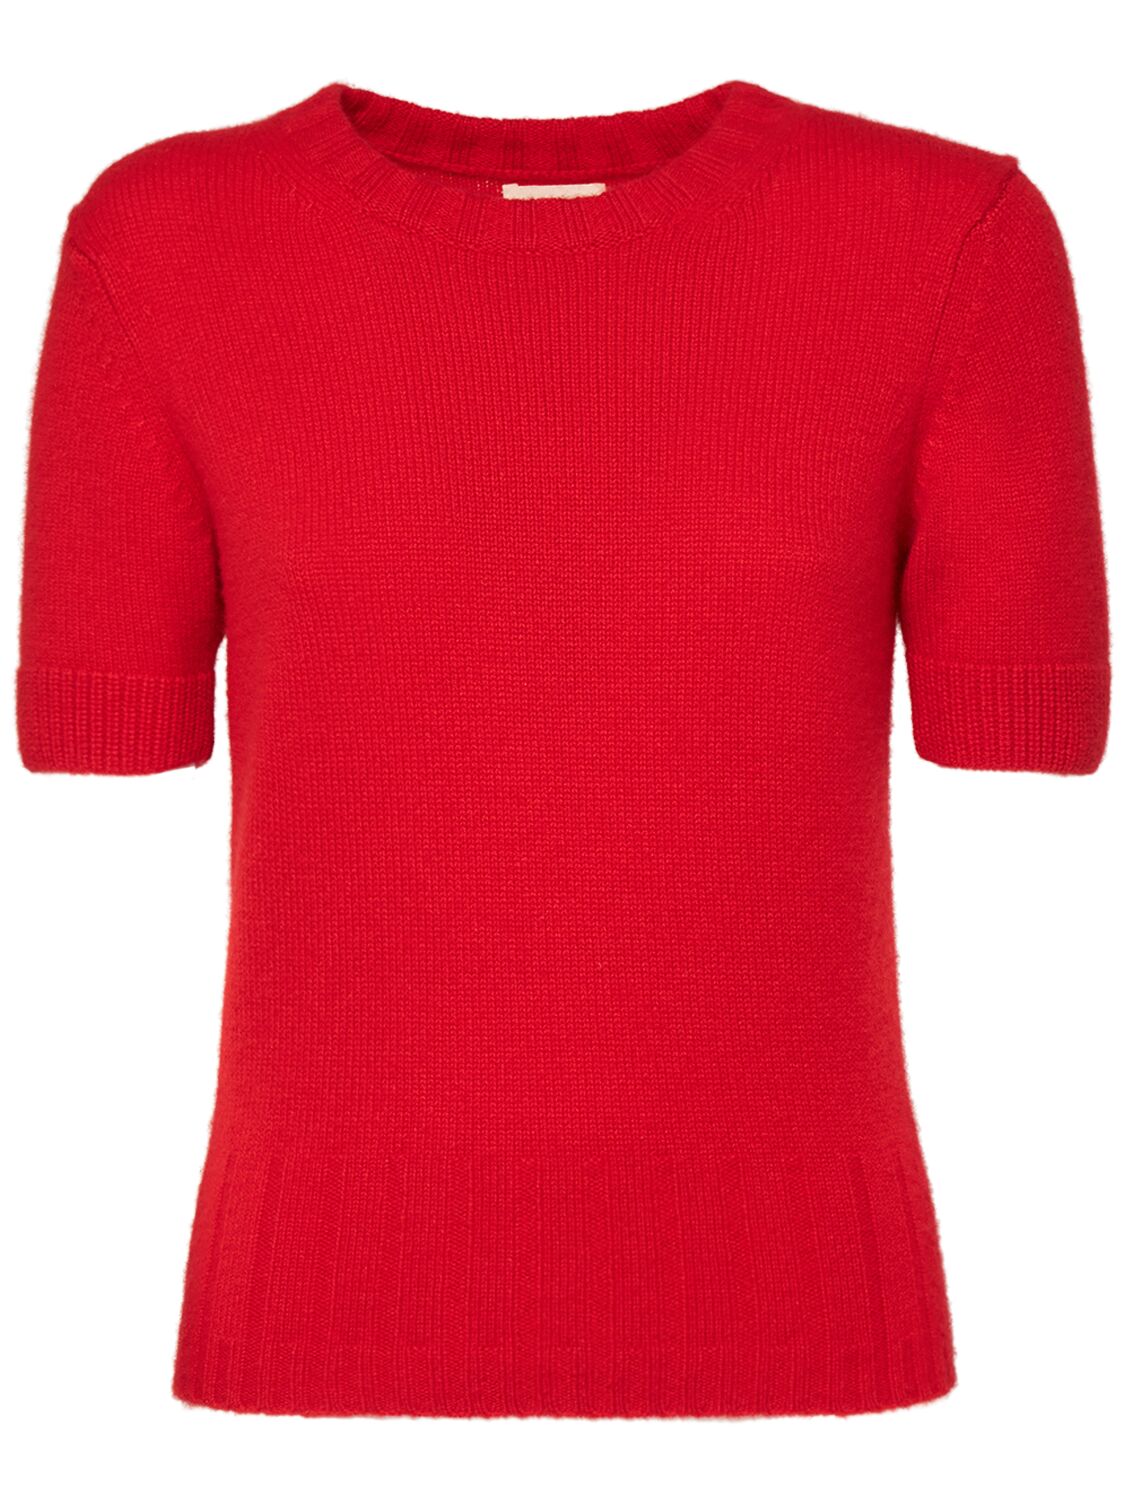 Luphia Cashmere Sweater